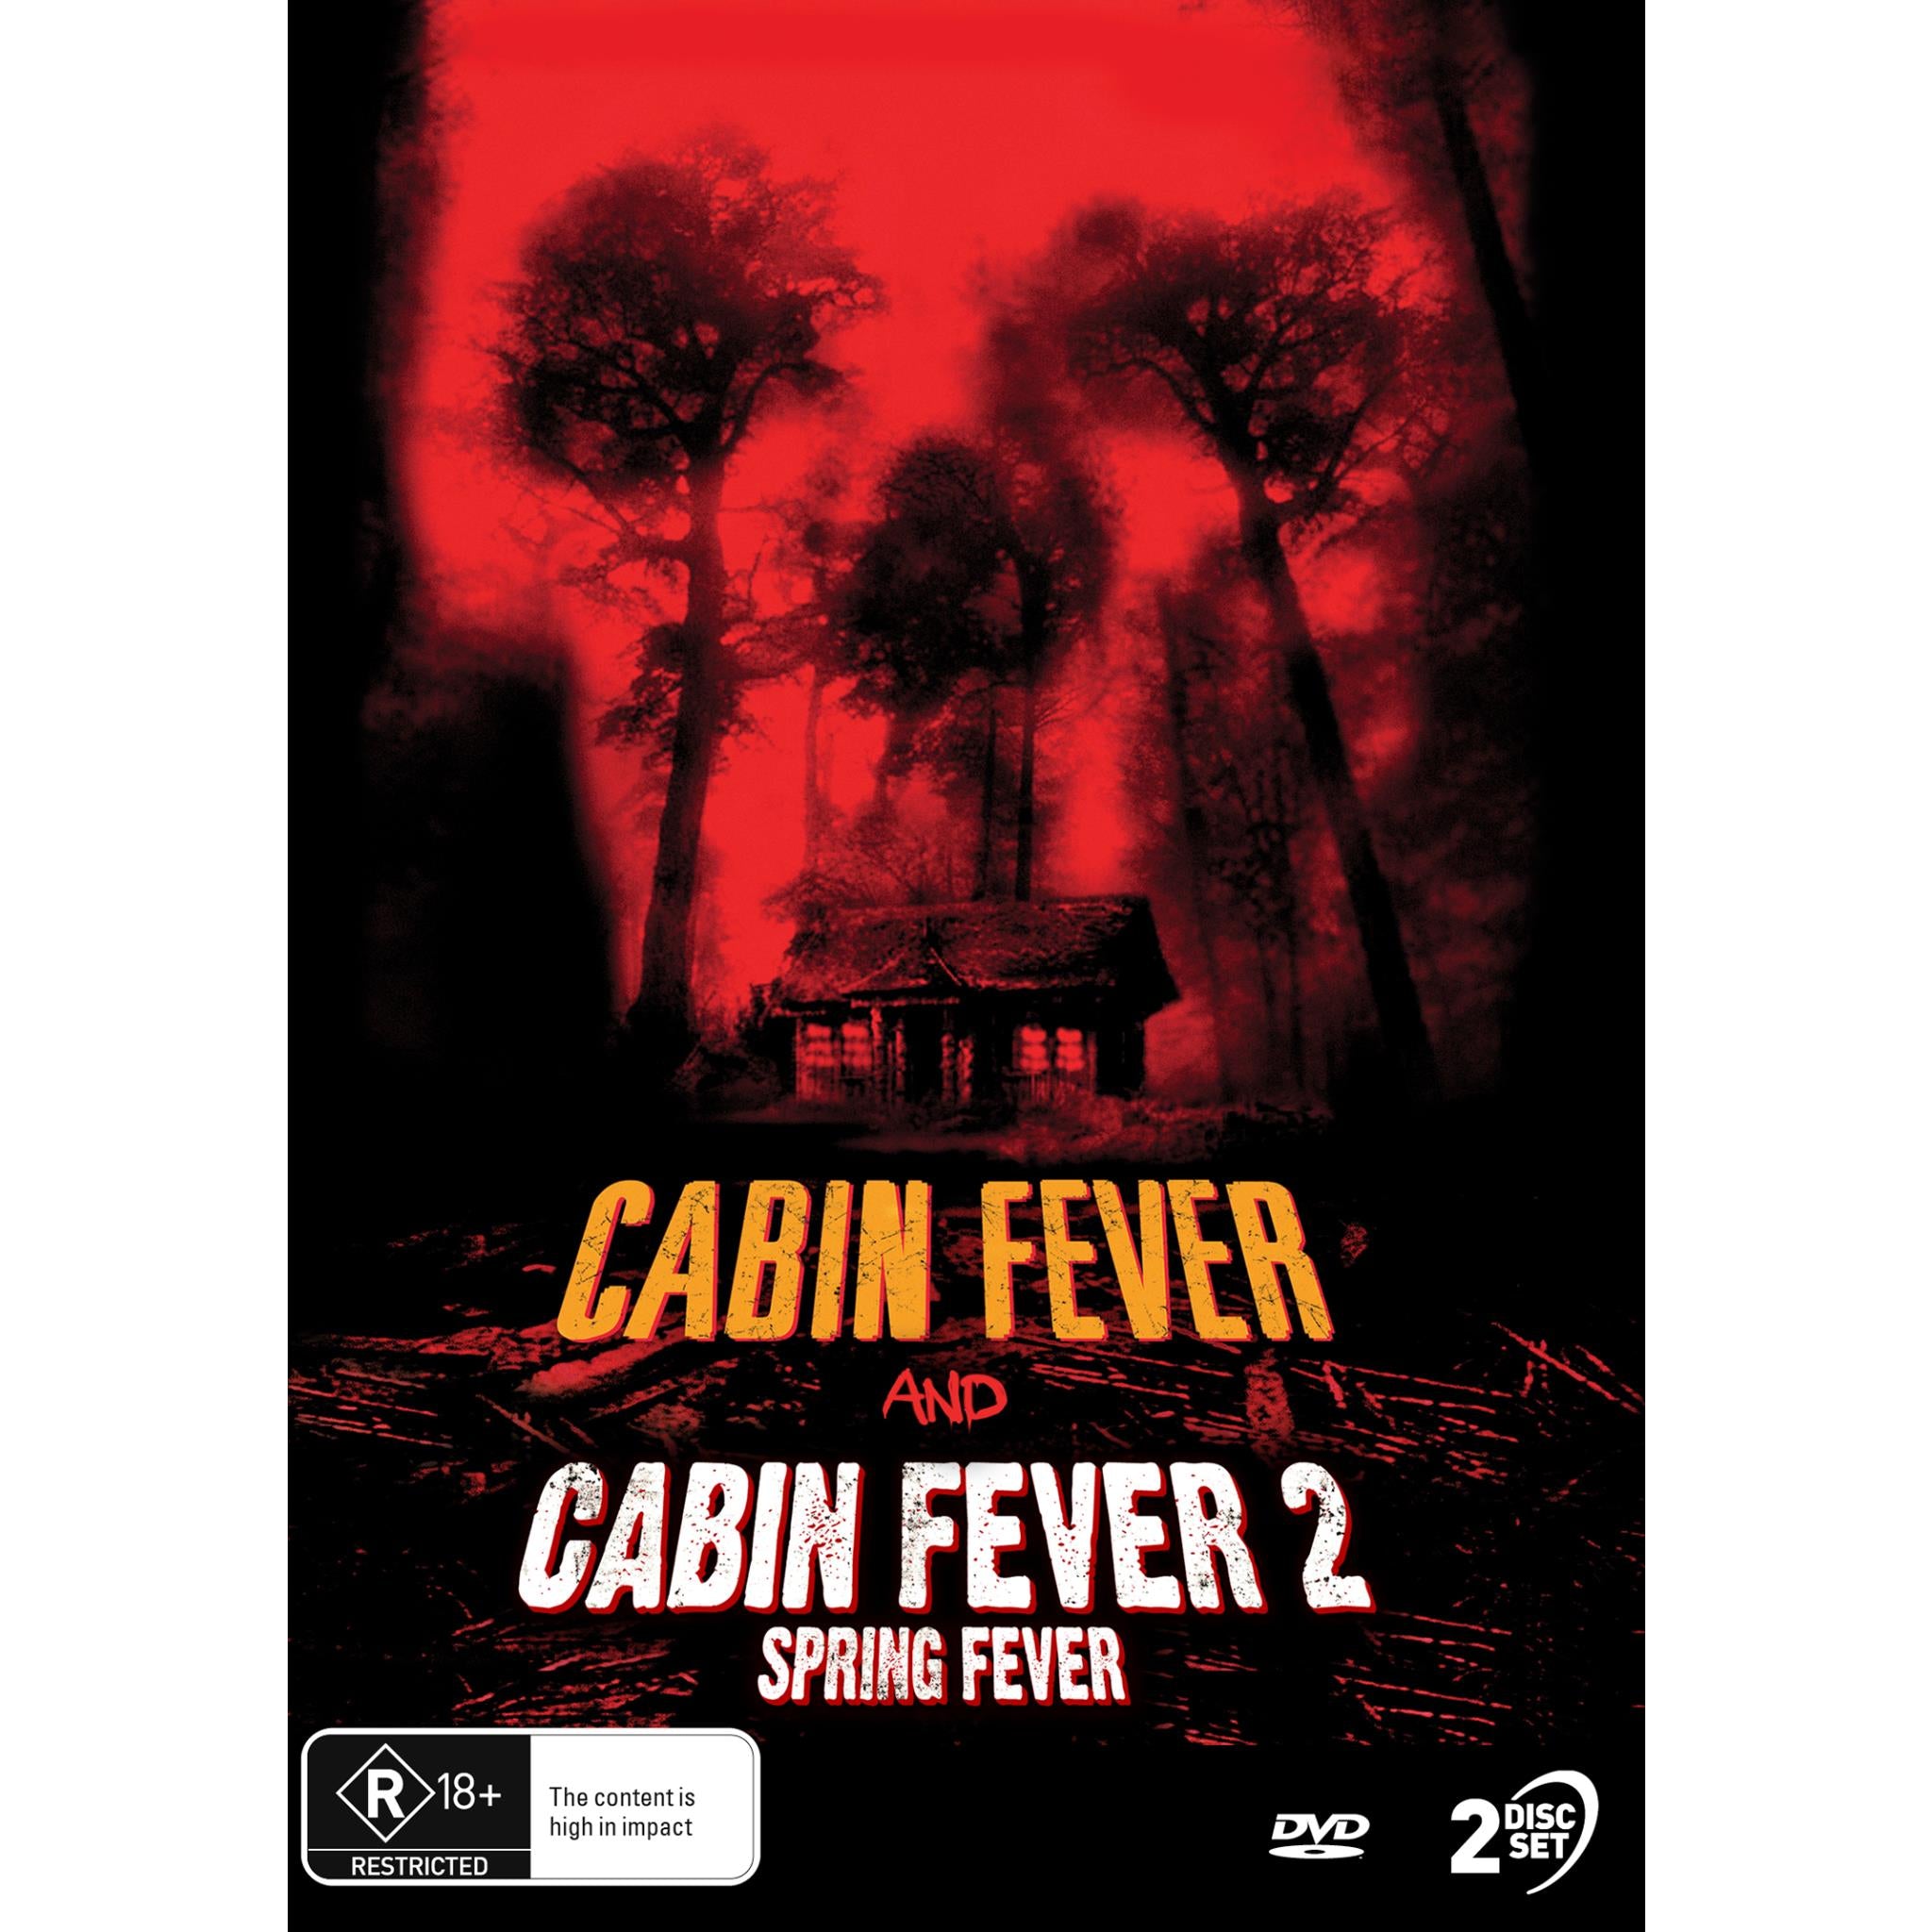 cabin fever/cabin fever 2: spring fever